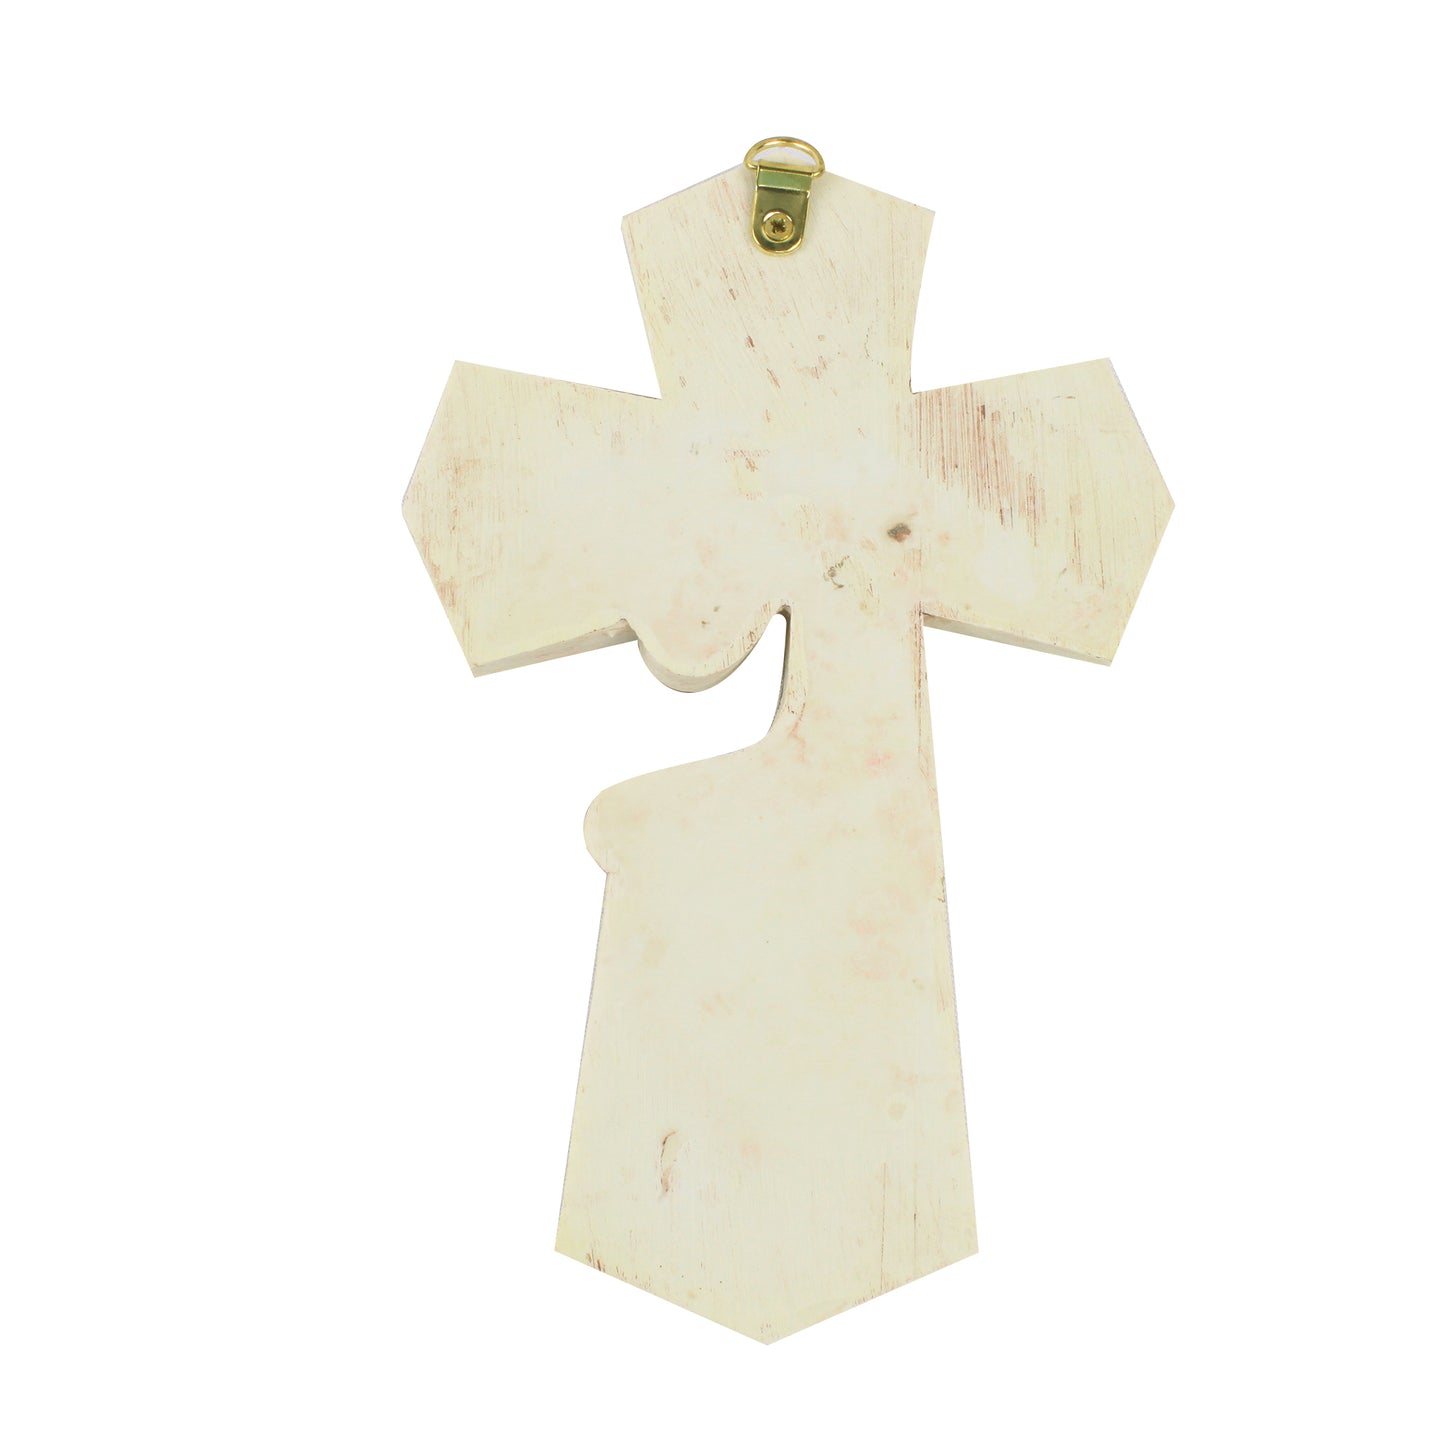 Stone Confirmation Cross - 22cm